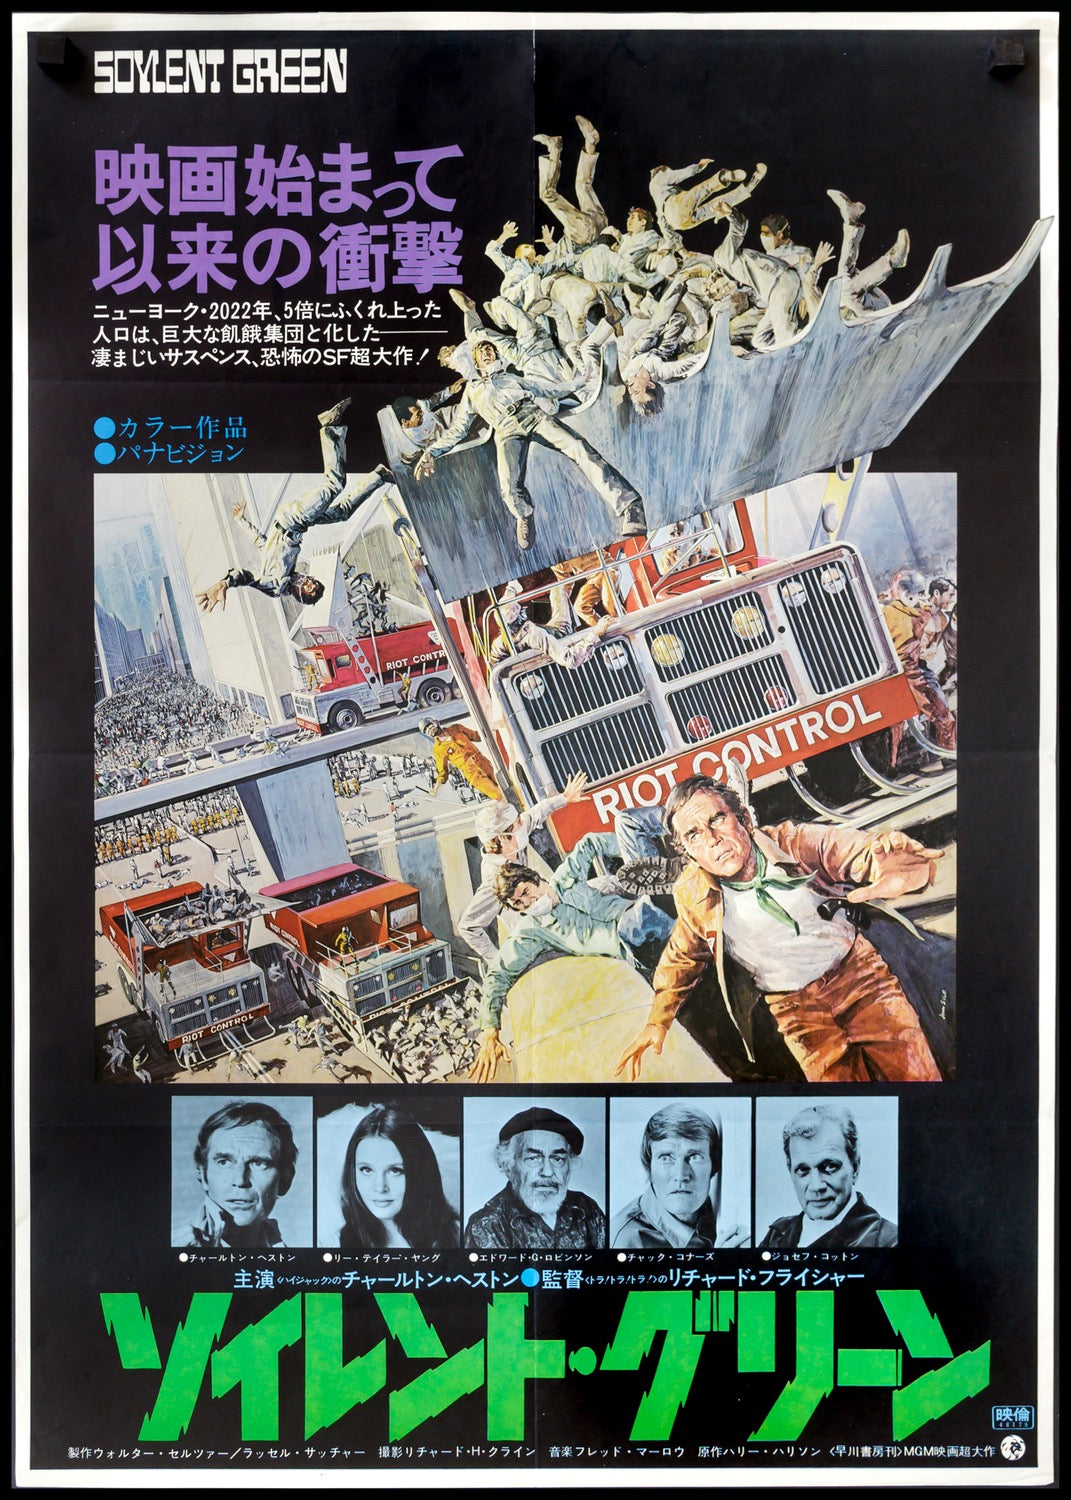 Soylent Green (1973) original movie poster for sale at Original Film Art